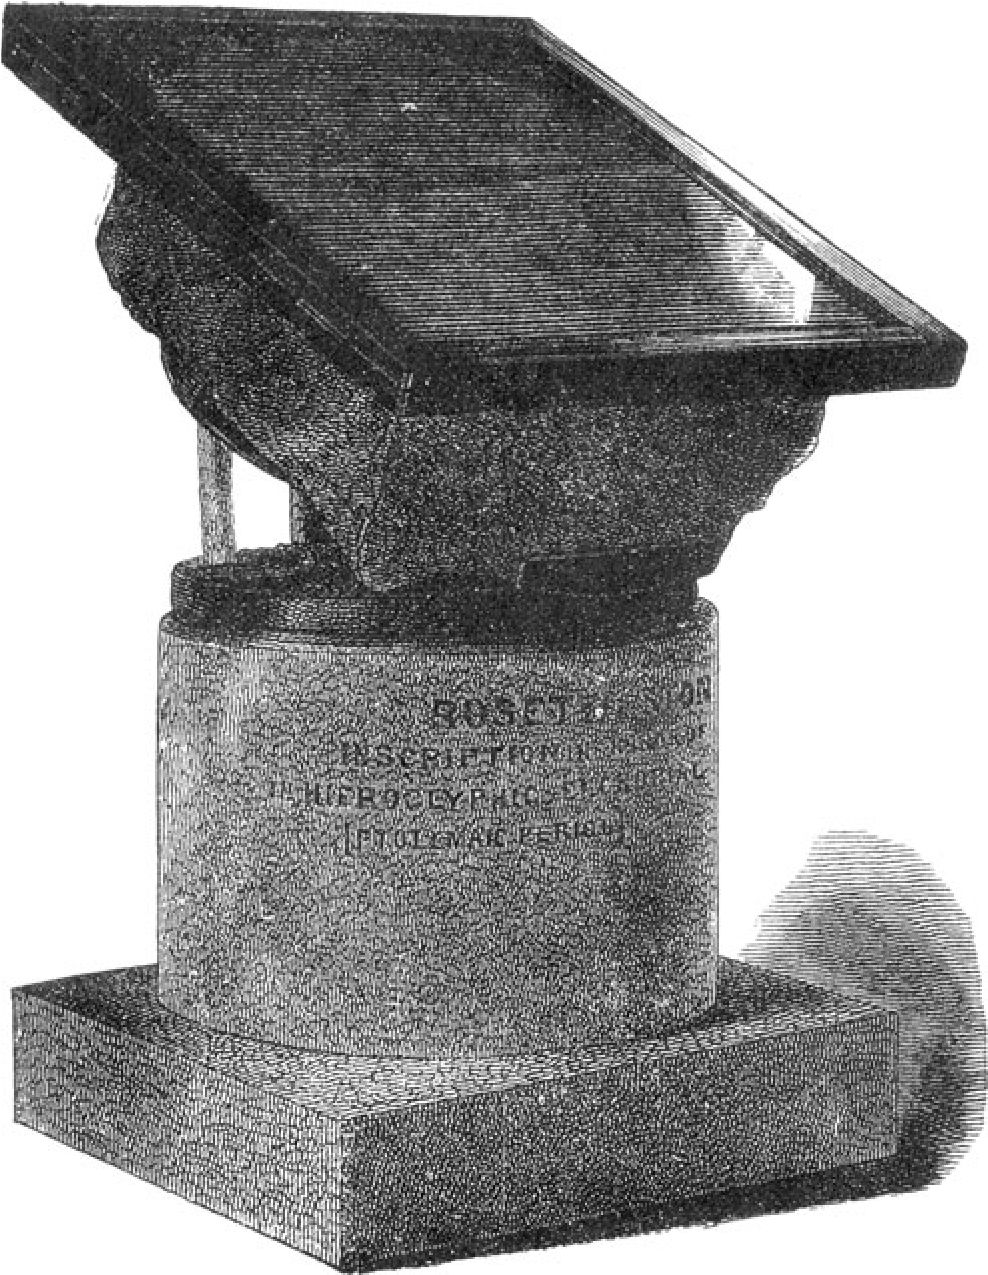 Розеттский камень (Британский музей)